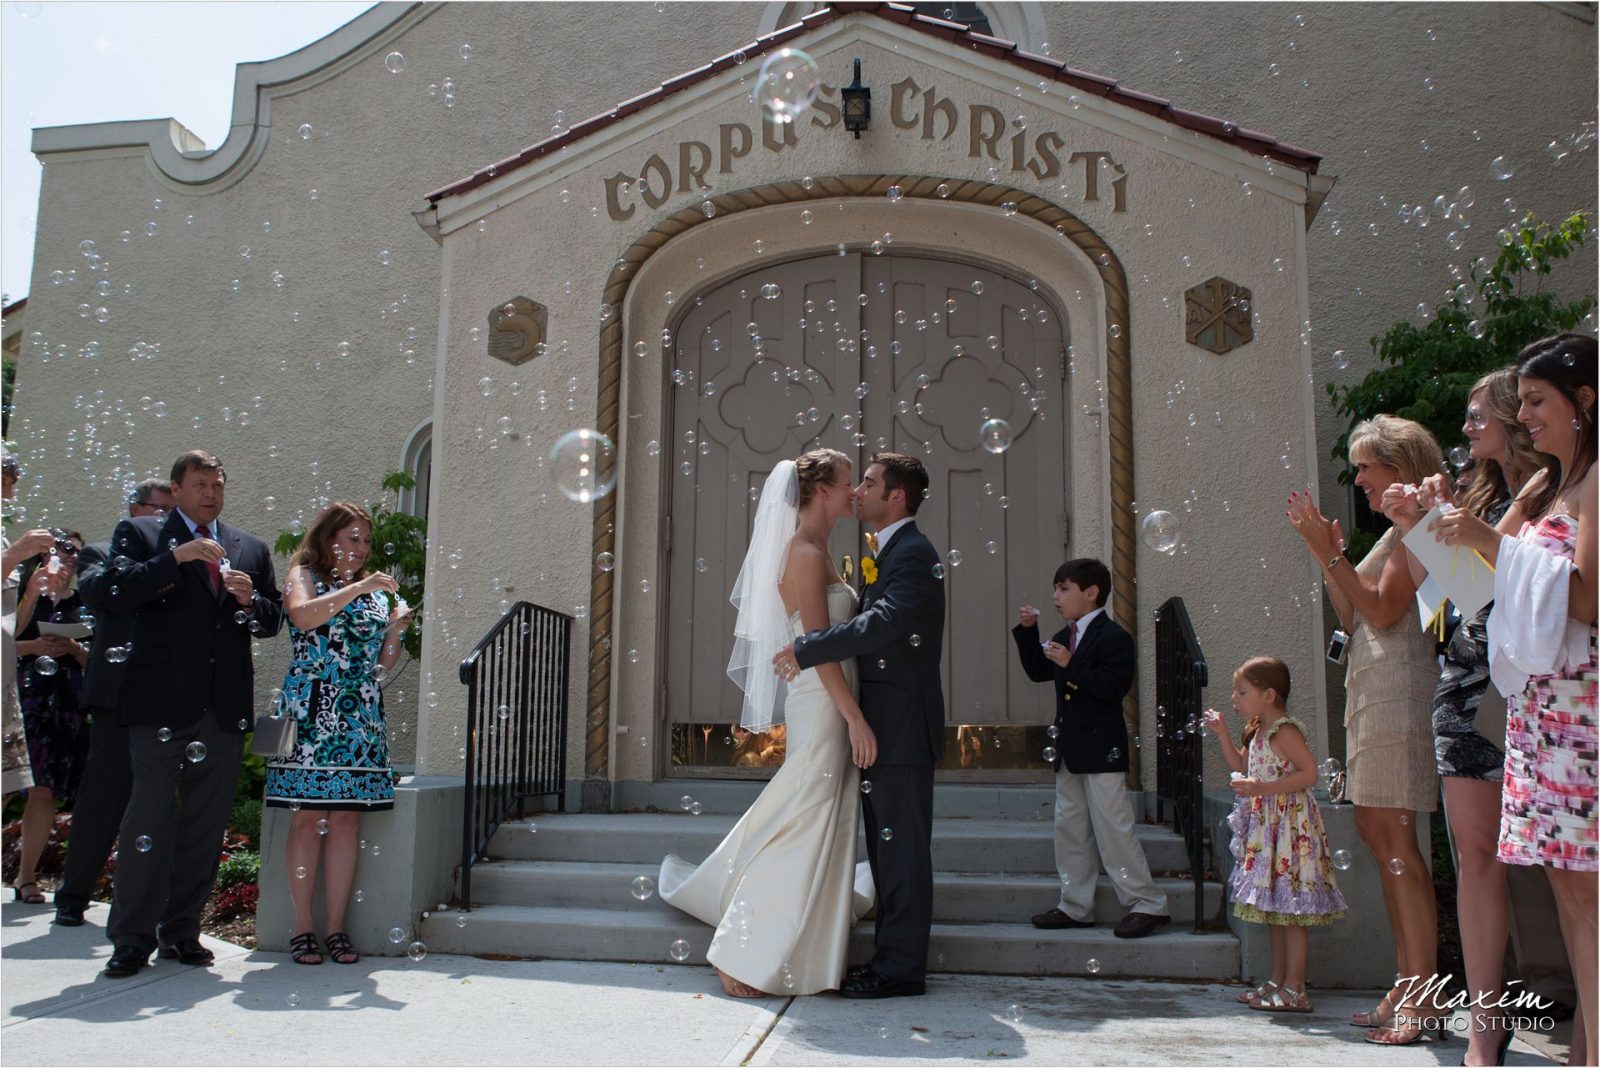 Corpus Christi Dayton Ohio Wedding Ceremony bubbles